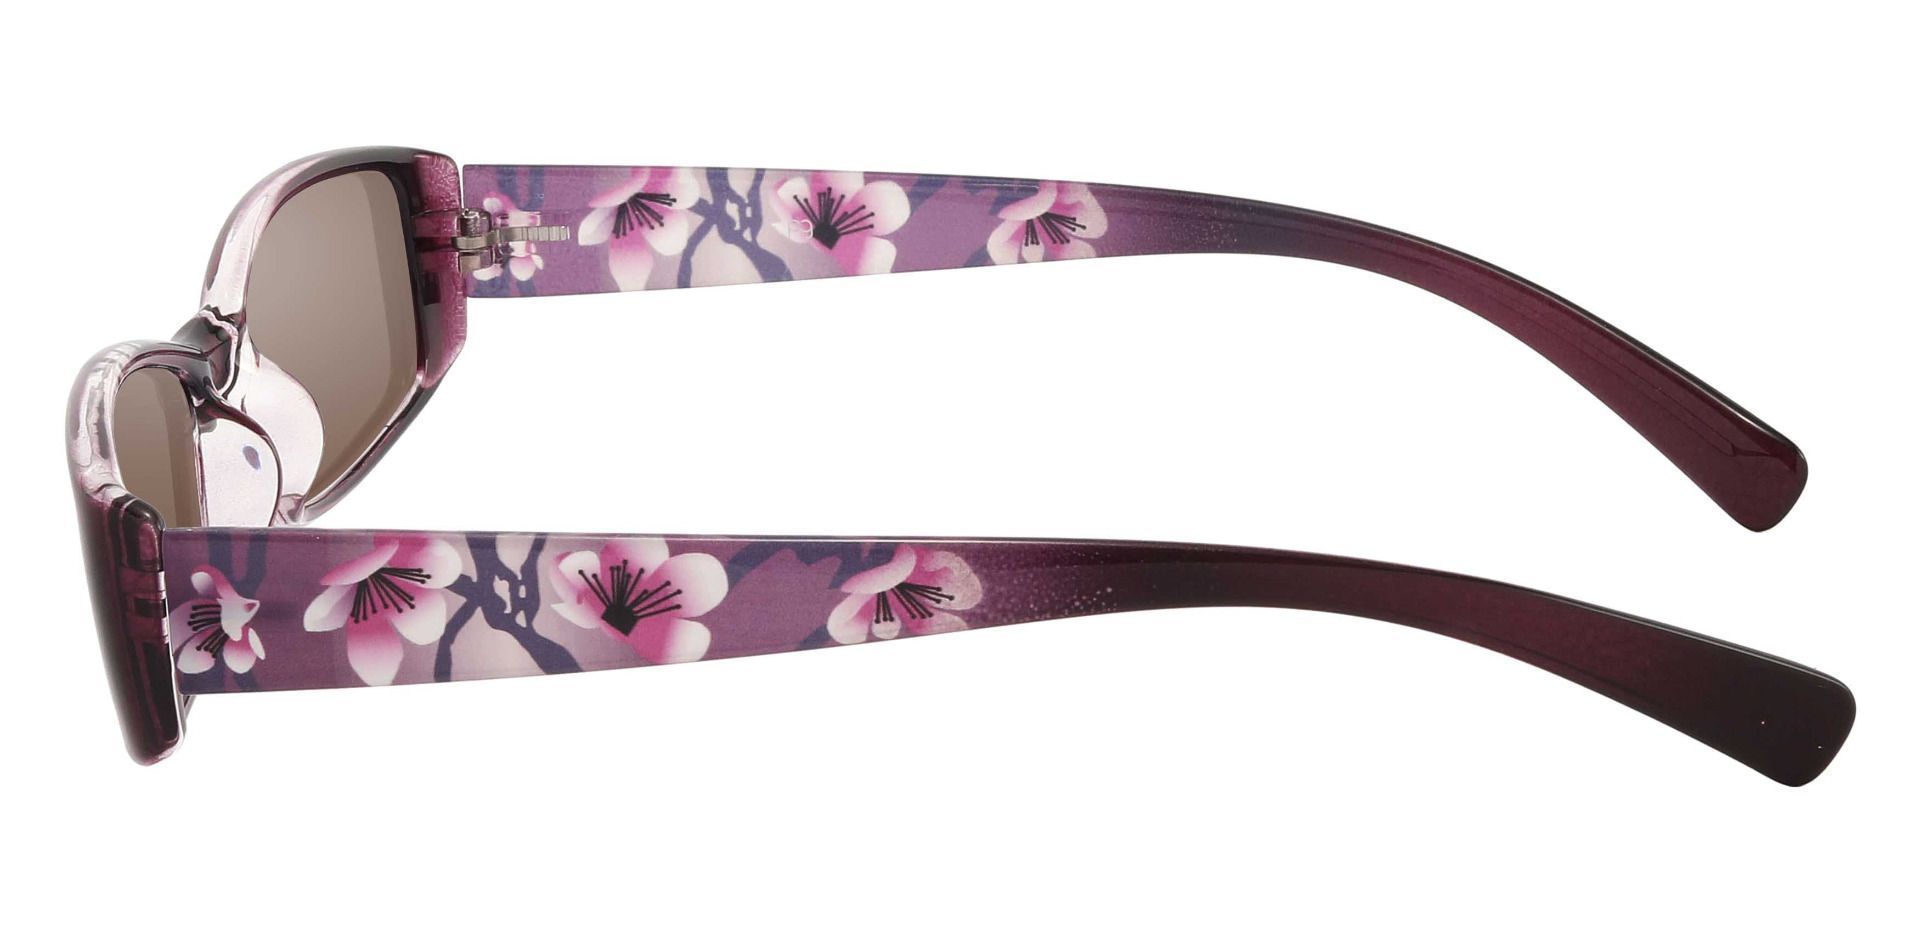 Medora Rectangle Reading Sunglasses - Purple Frame With Brown Lenses